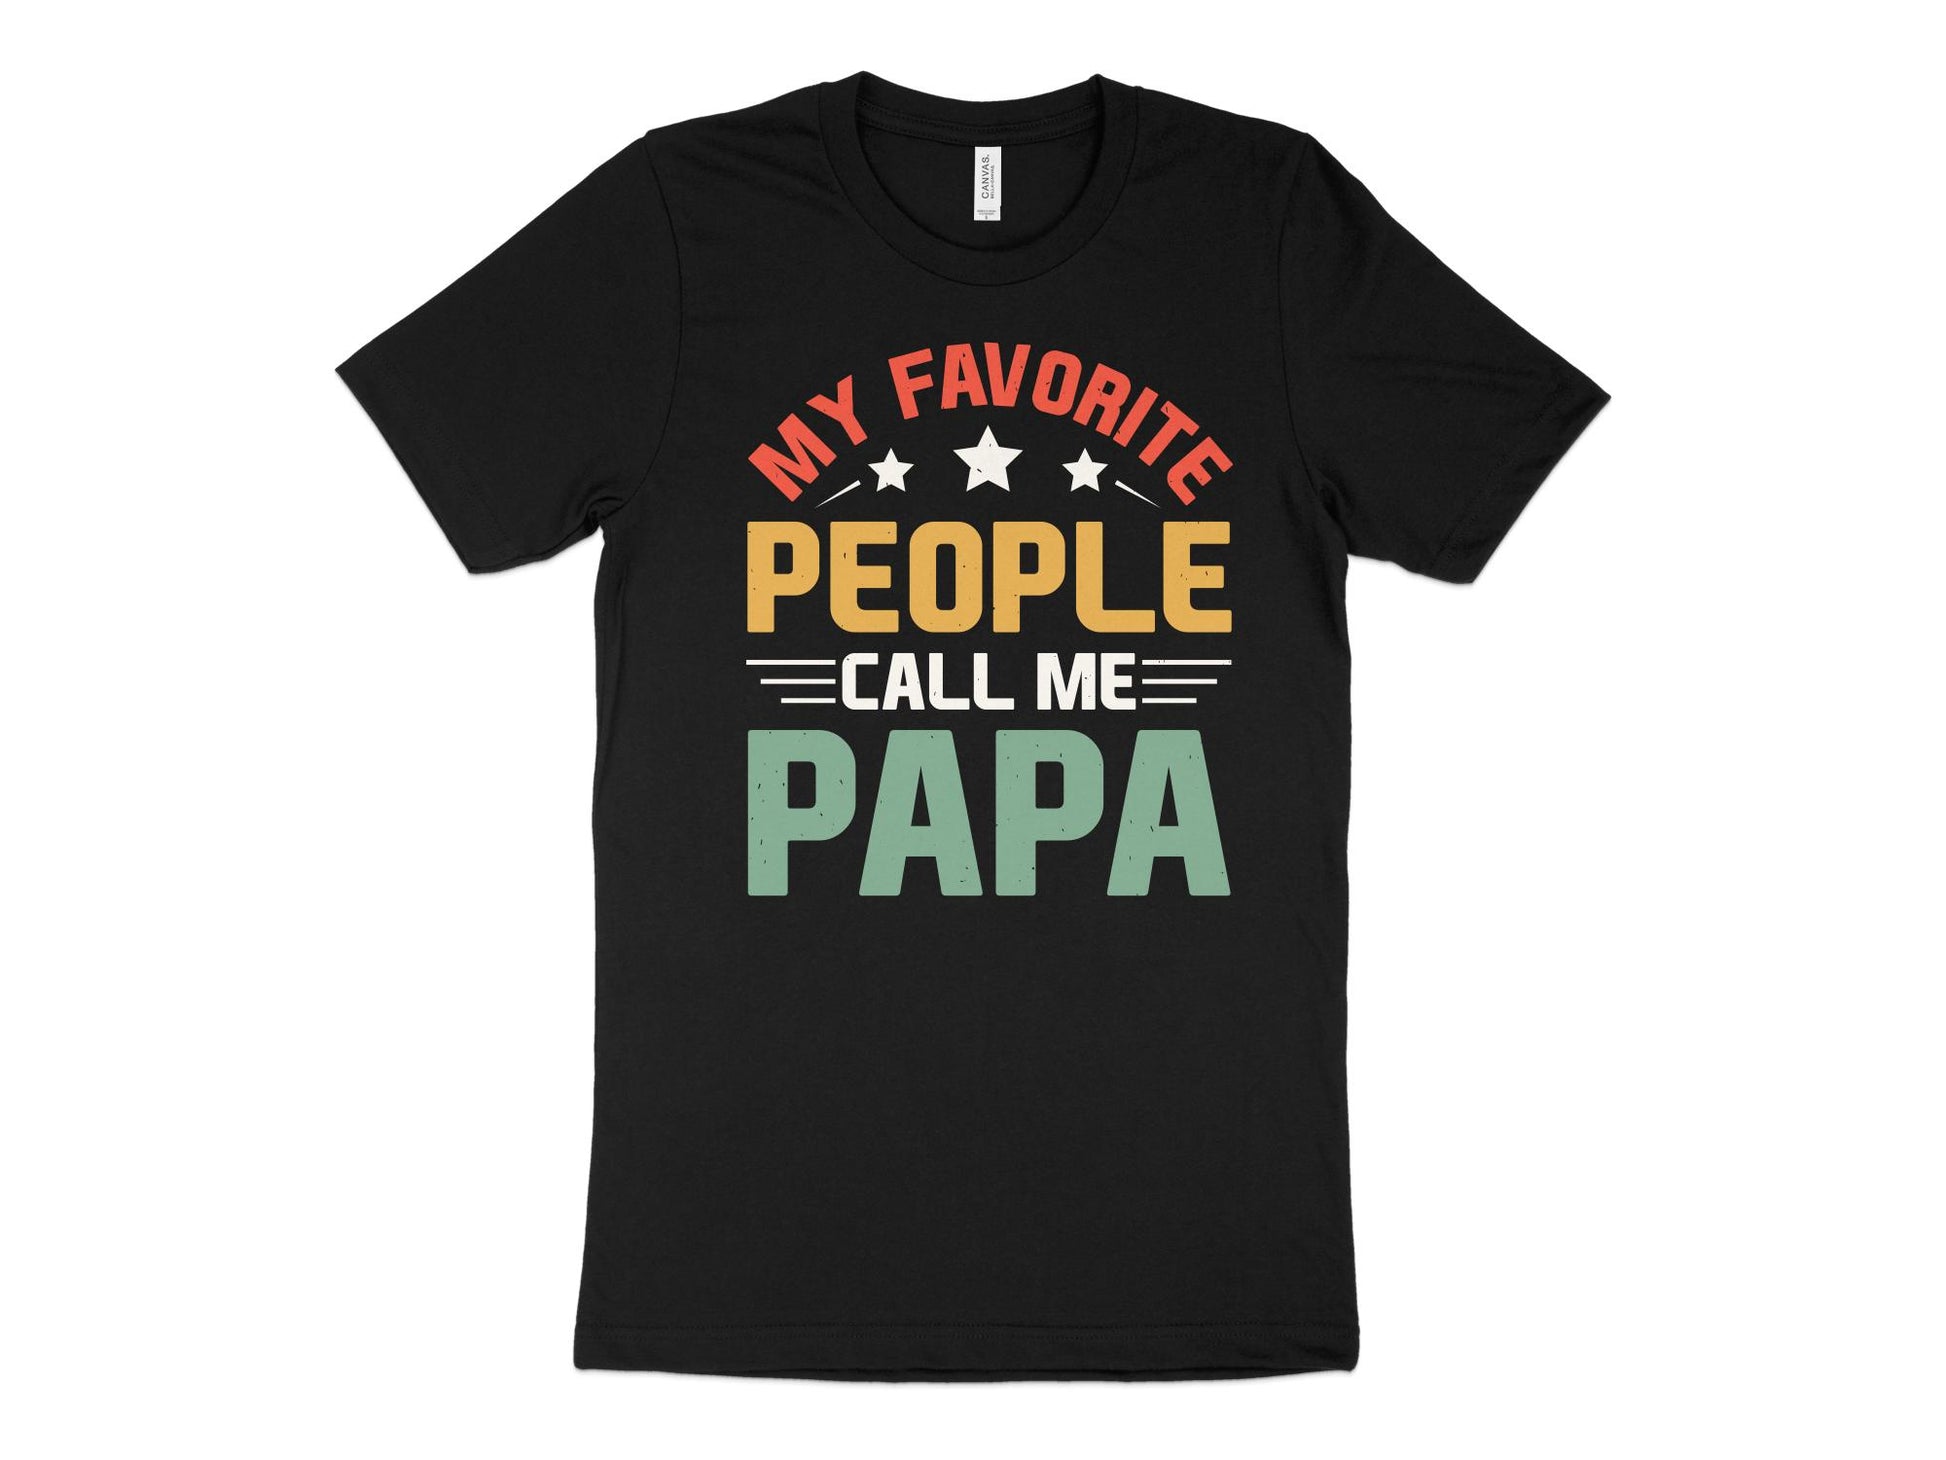 My Favorite People Call Me Papa Shirt, black